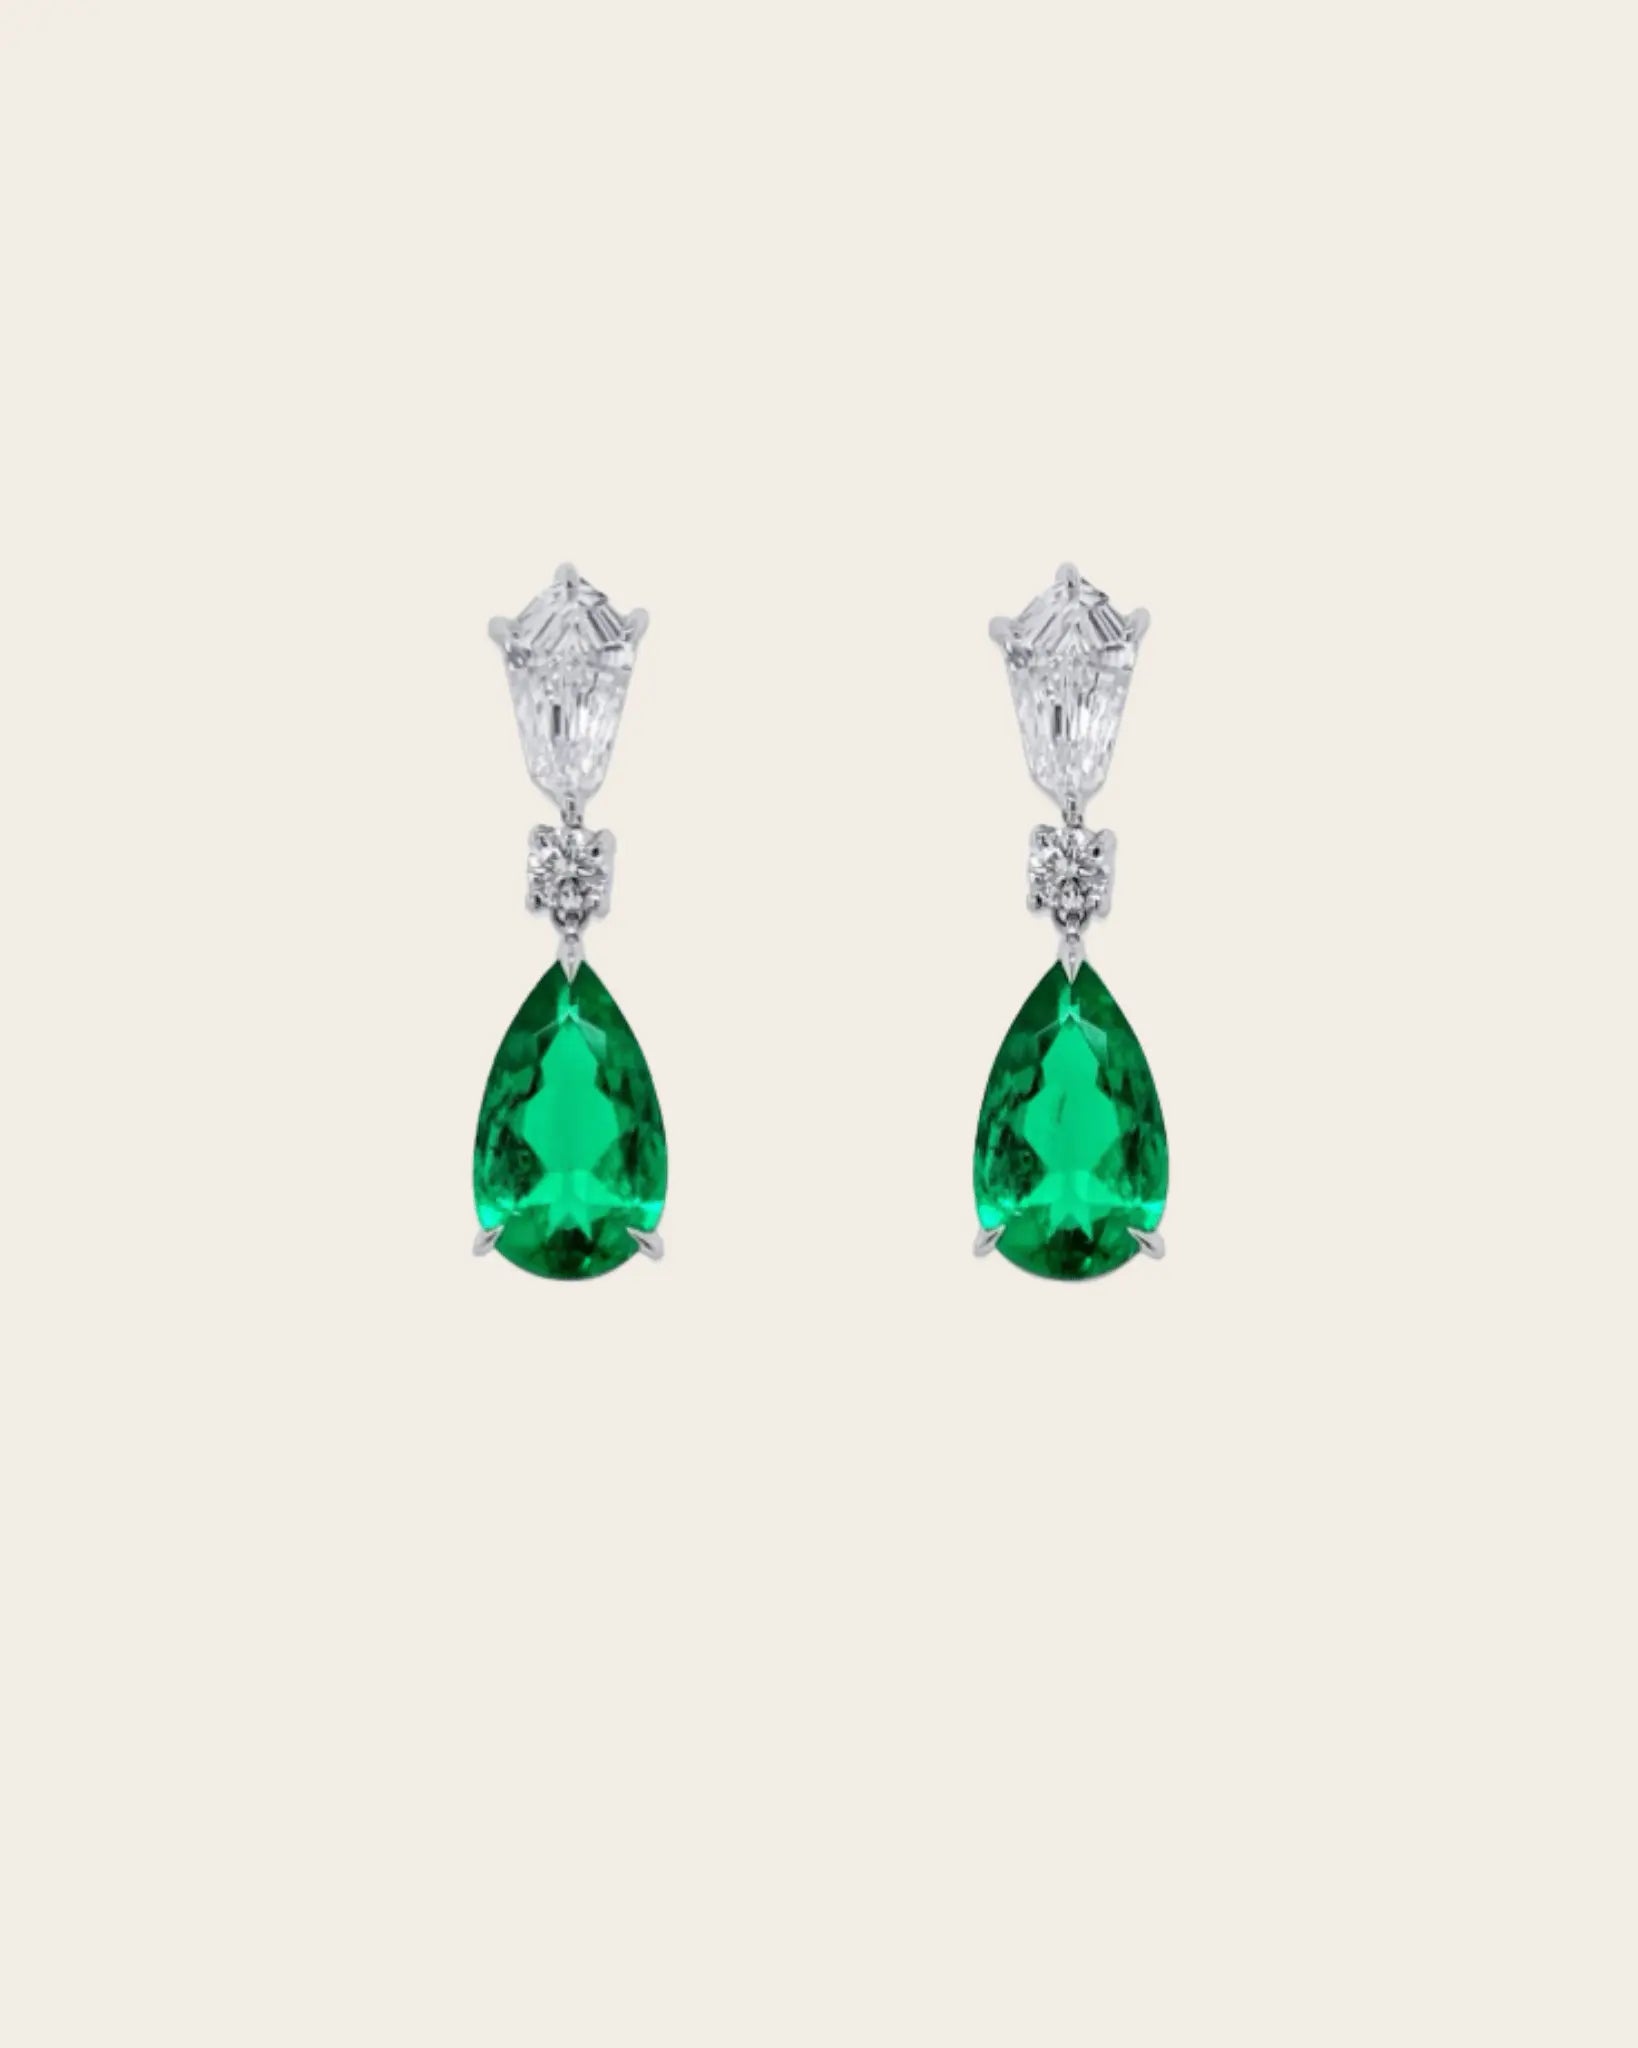 A pair of Bayco diamond & emerald teardrop earrings.